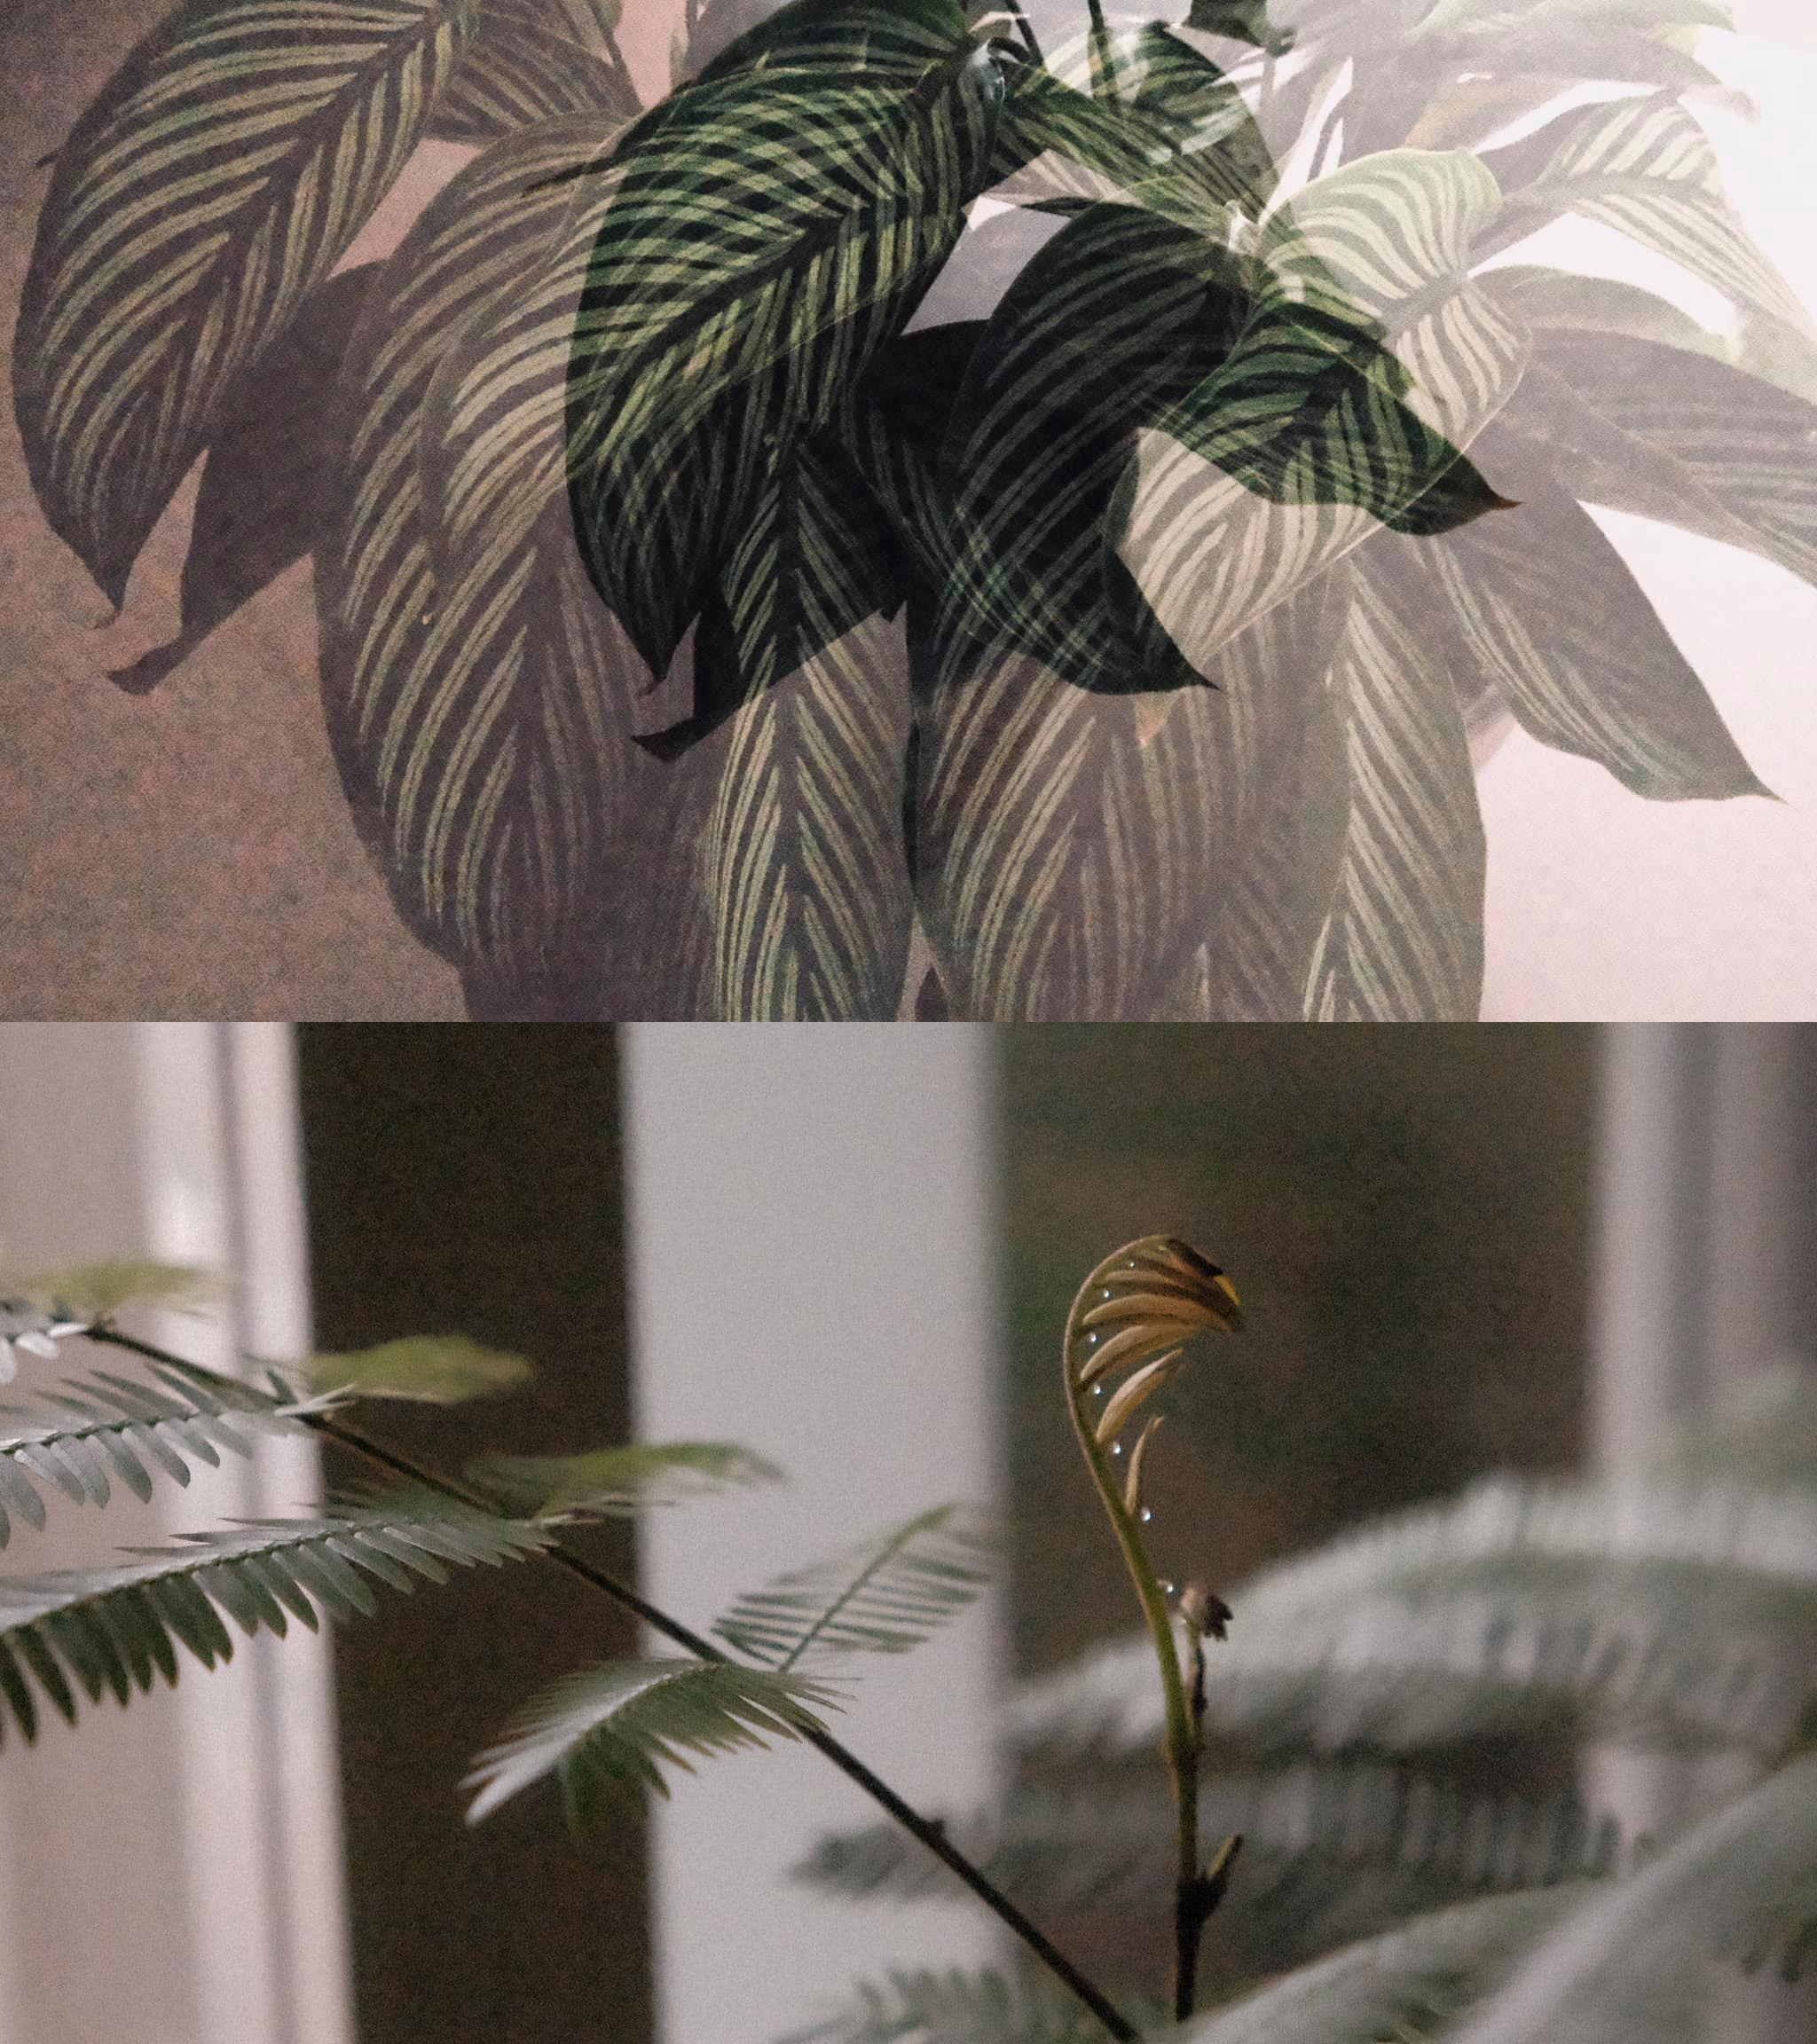 Tanya's photos of plants